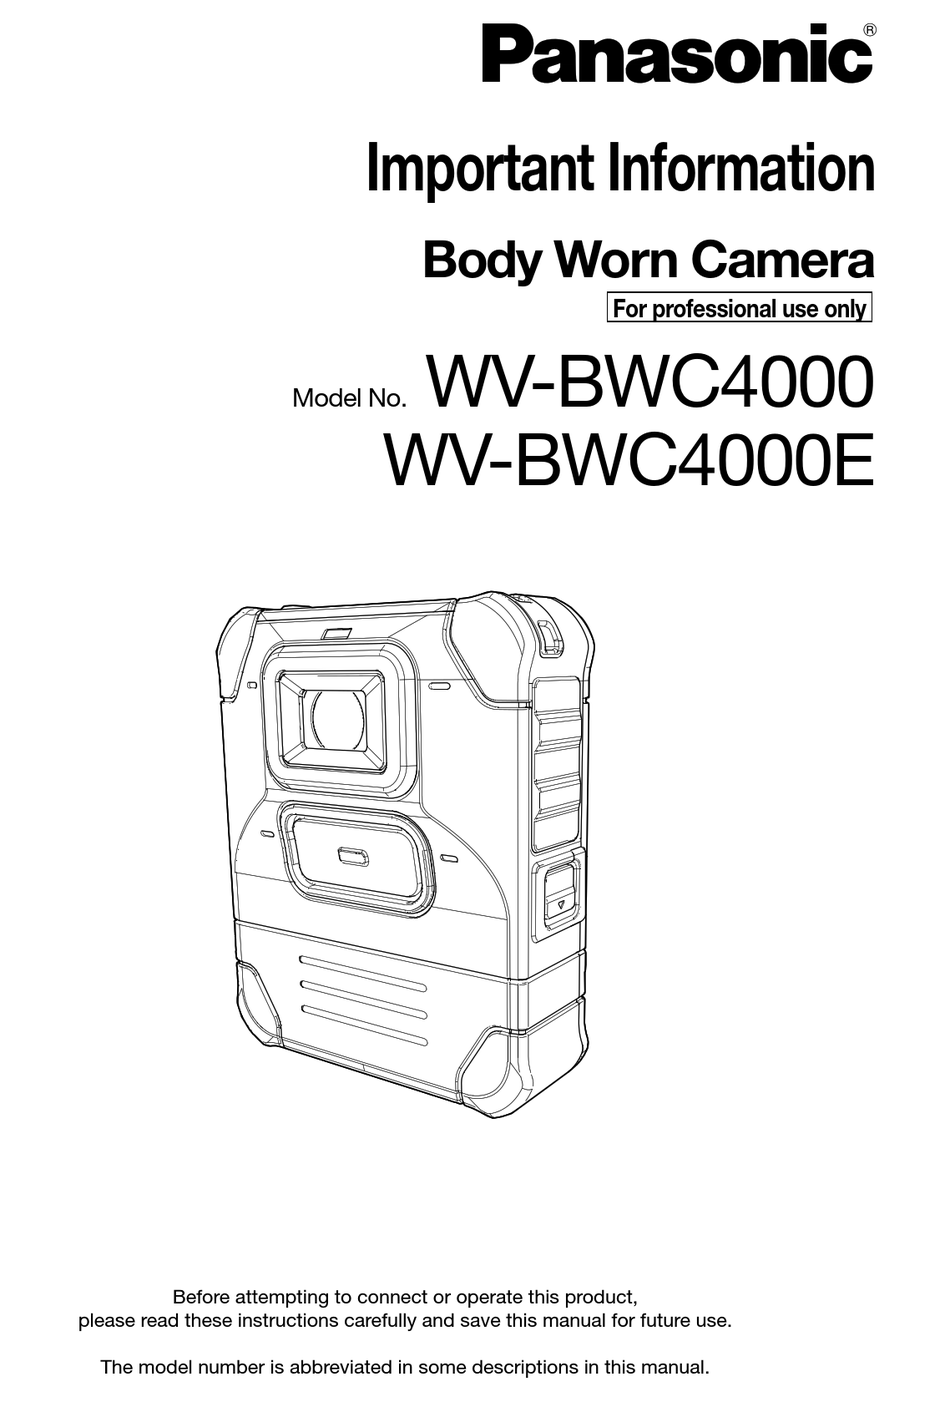 PANASONIC WV-BWC4000 IMPORTANT INFORMATION MANUAL Pdf Download | ManualsLib